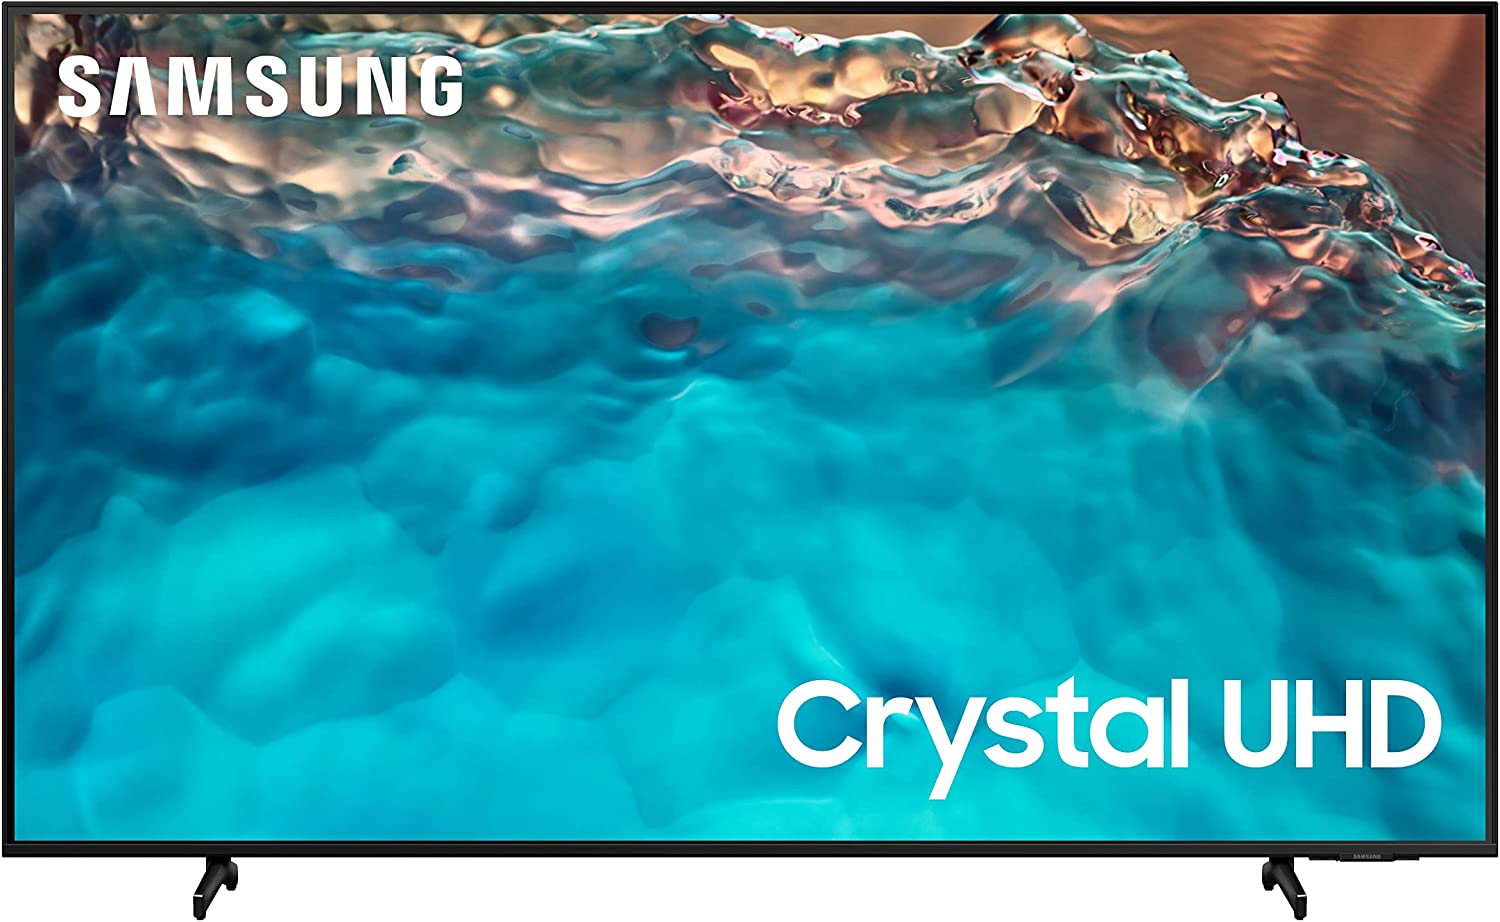 Samsung BU8000 Crystal UHD